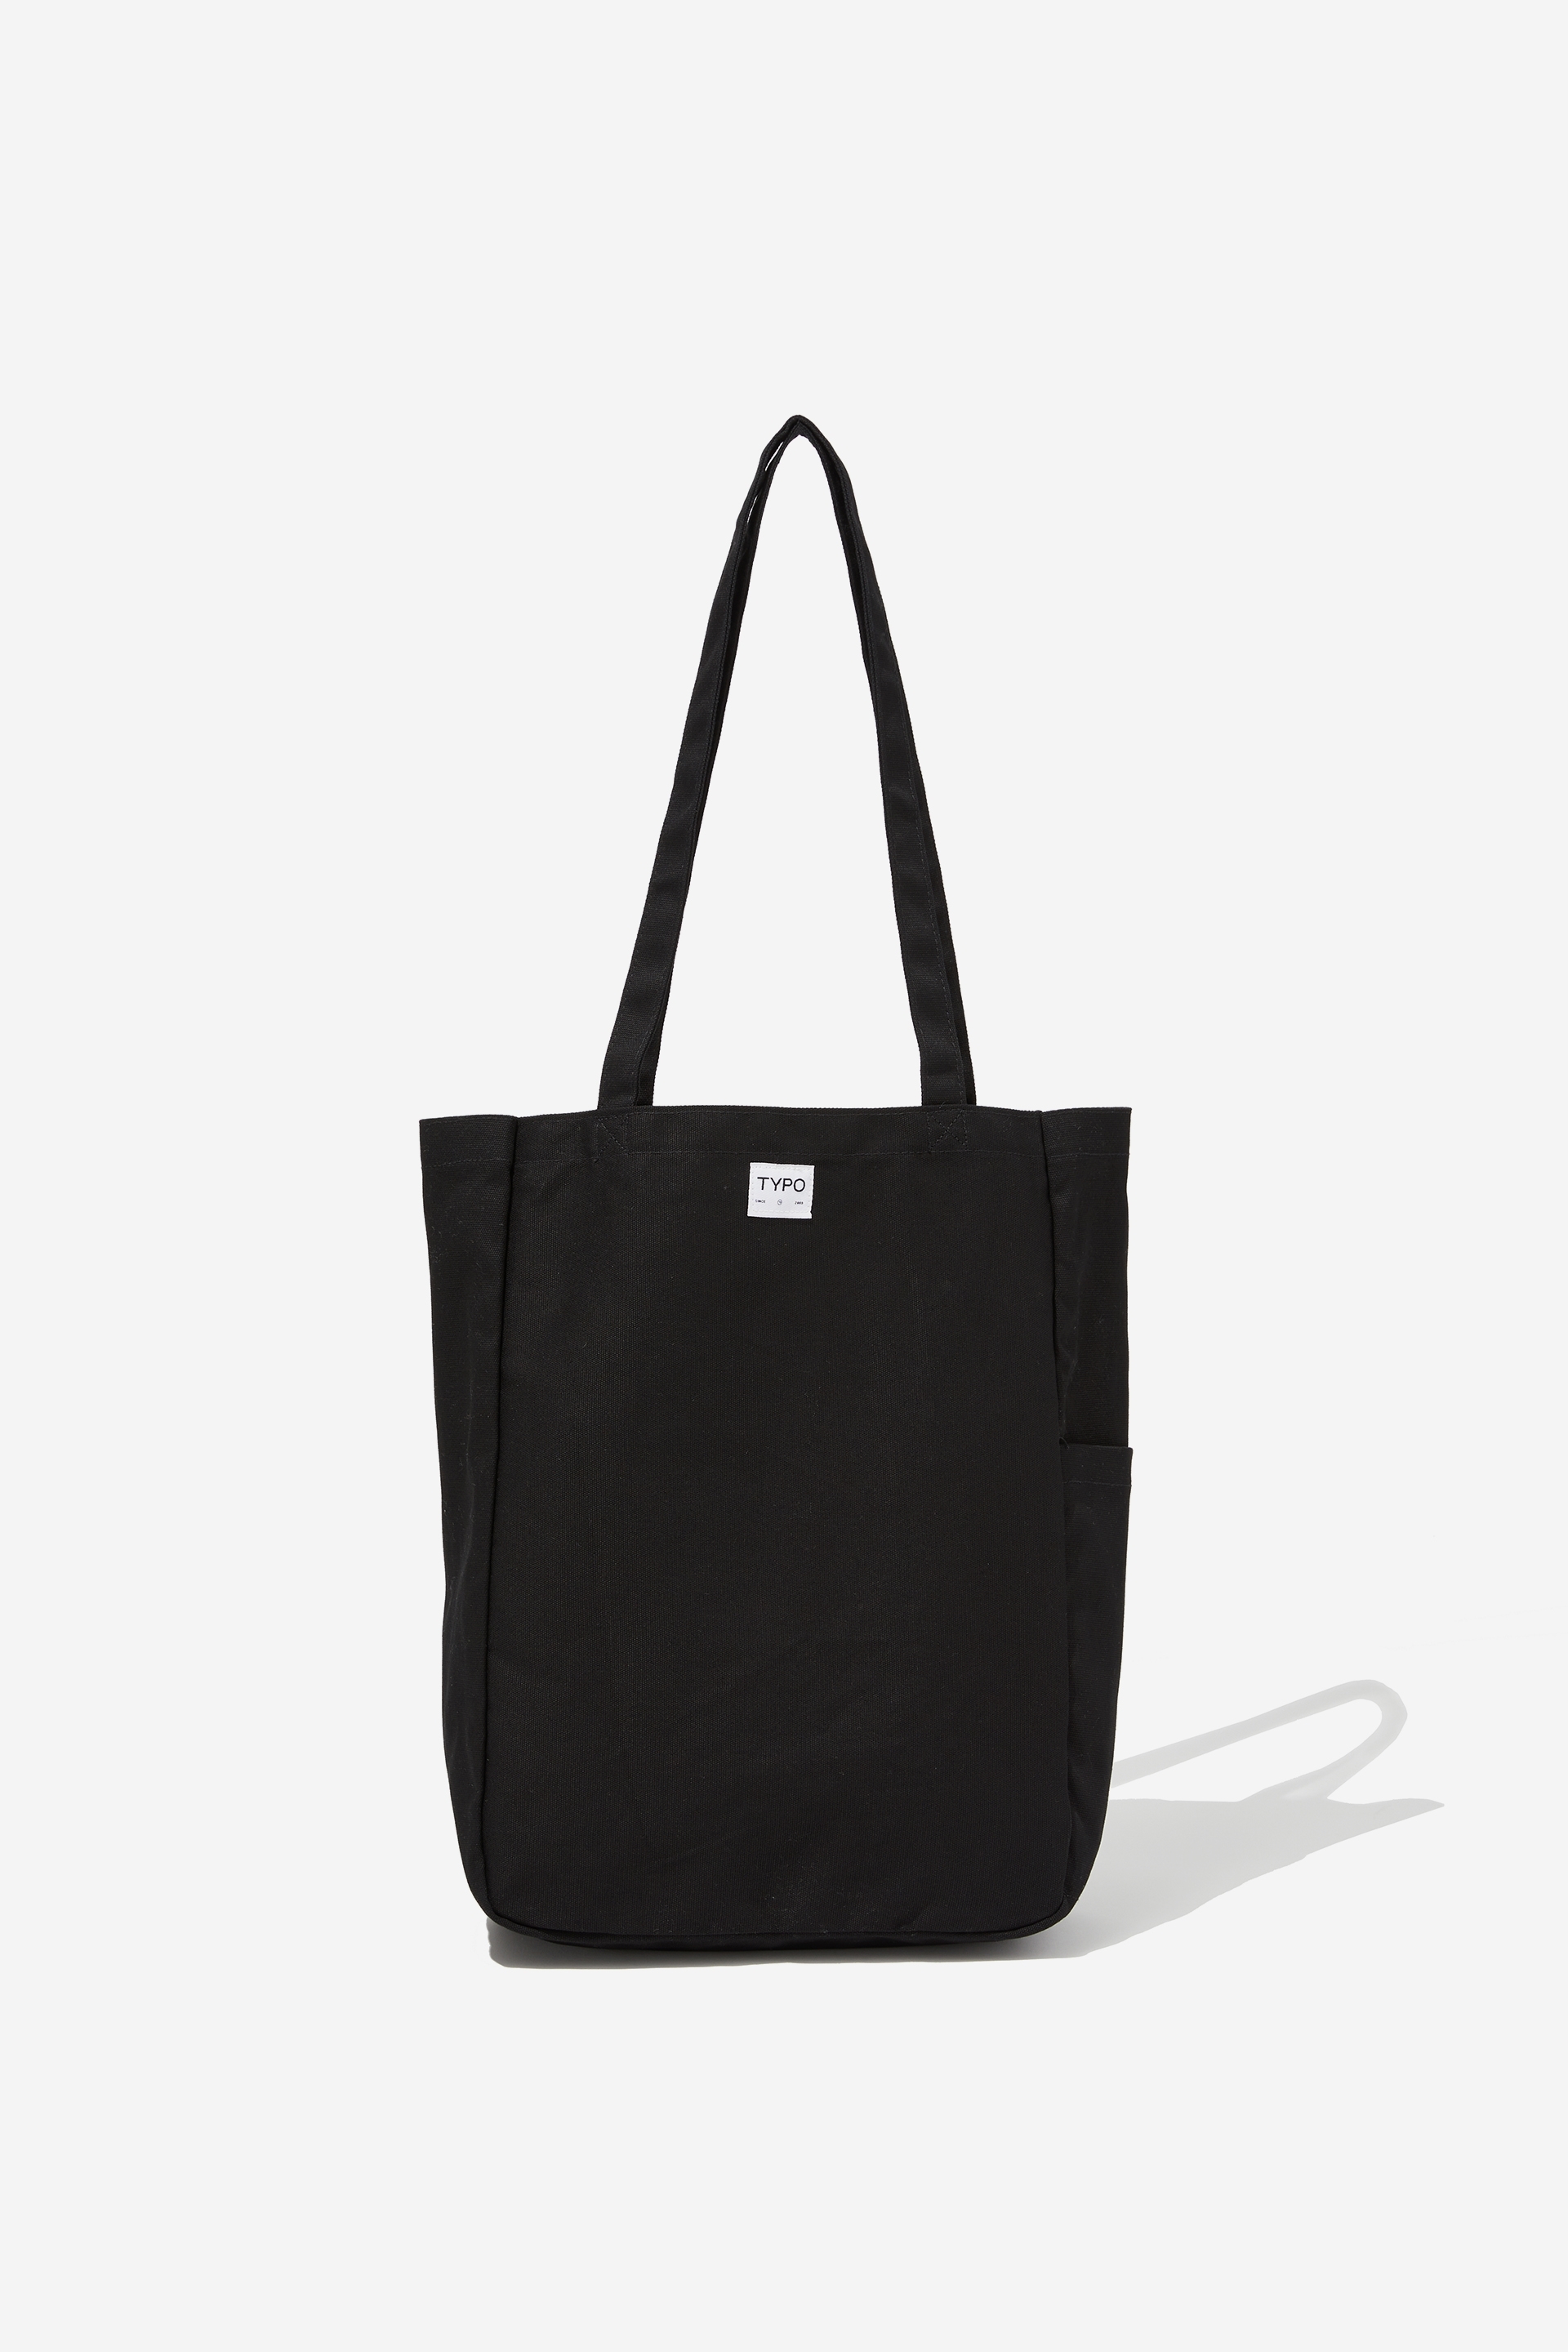 Typo - Art Tote Bag - Solid black